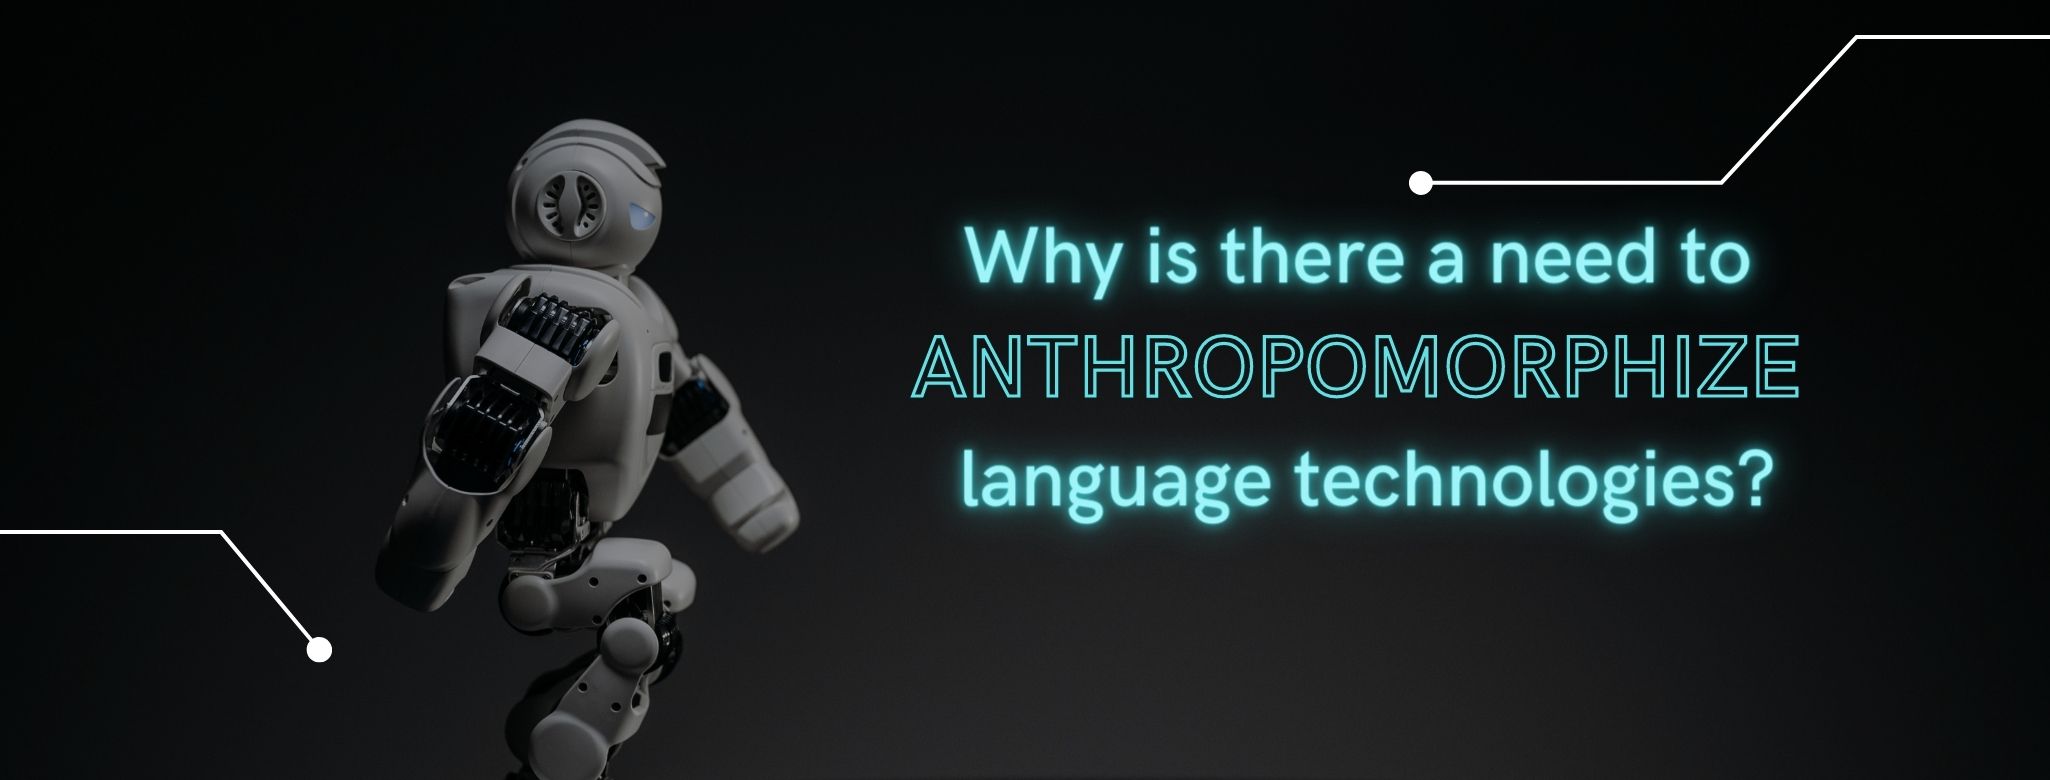 anthropomorphization-language